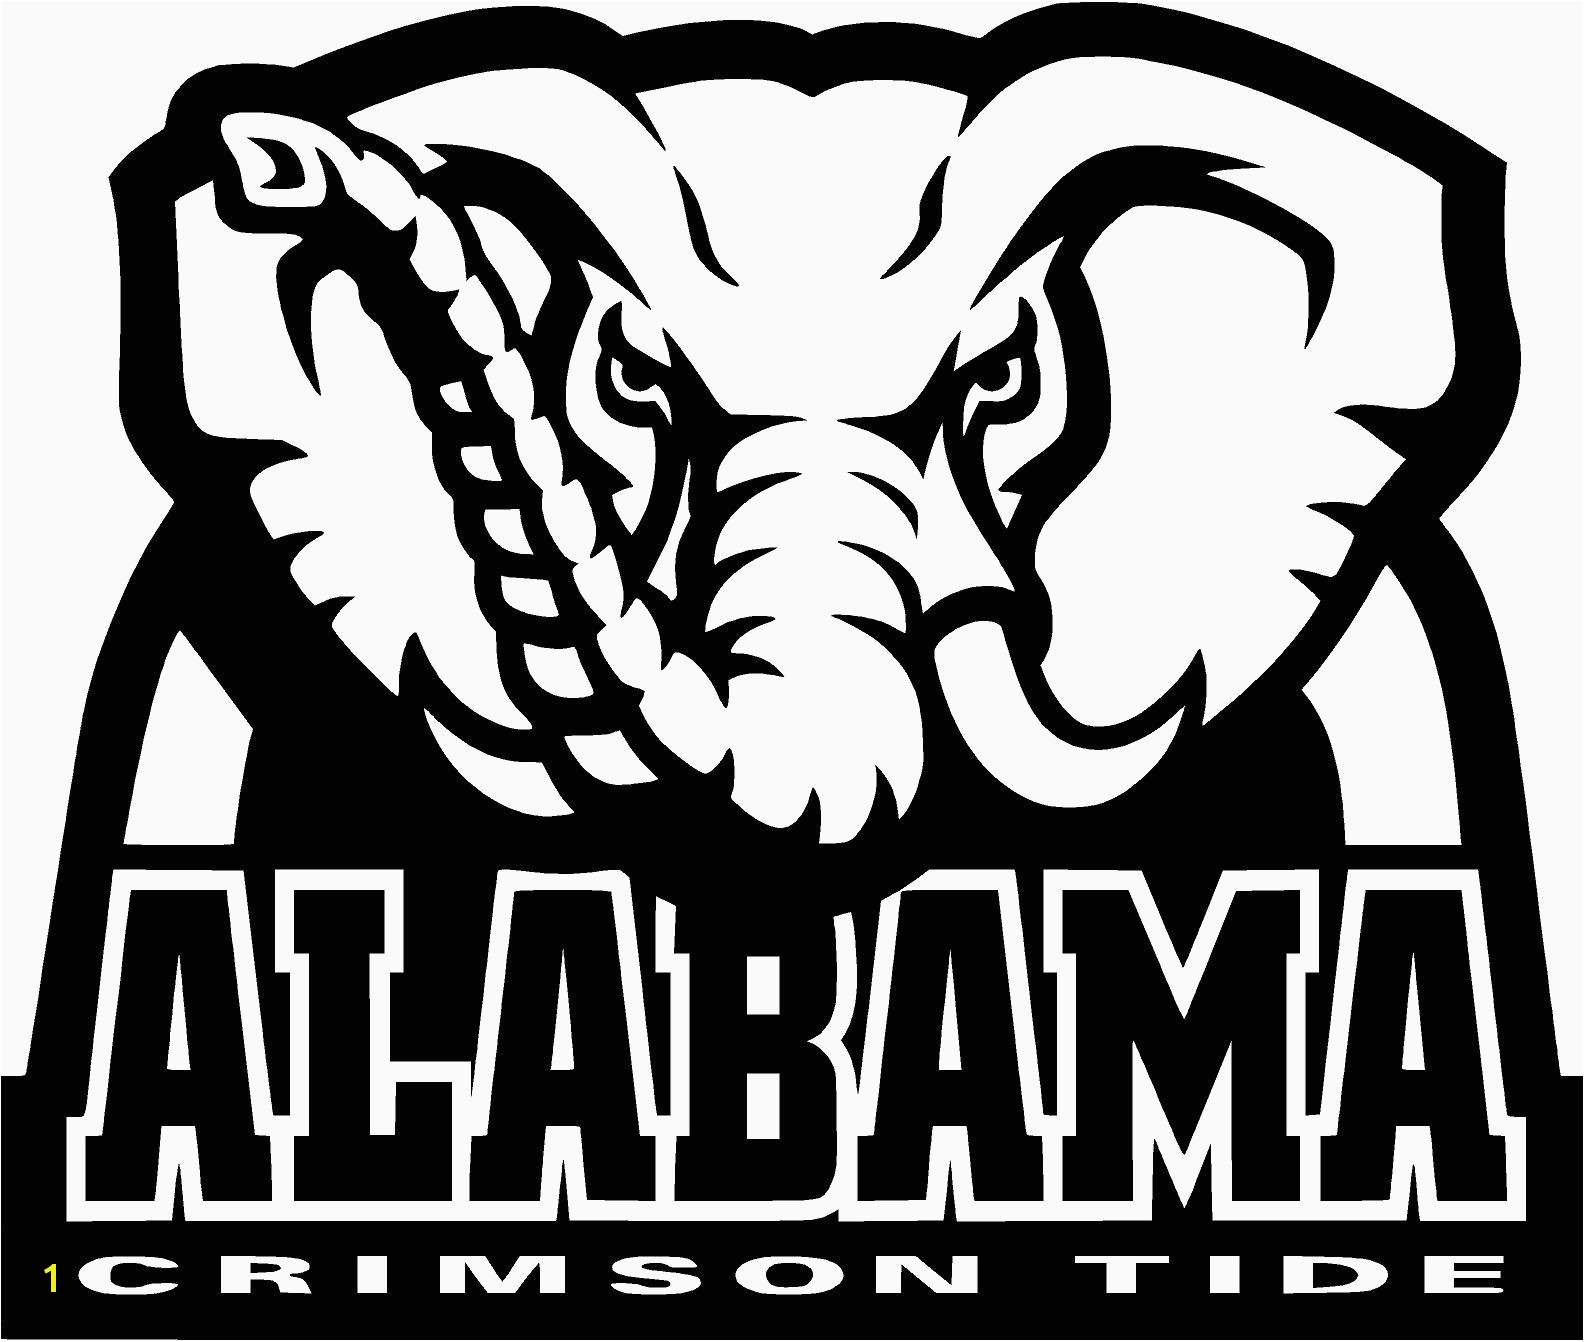 Alabama Crimson Tide Coloring Pages Alabama Crimson Tide Logosalabama Crimson Tide Logos Alabama Crimson